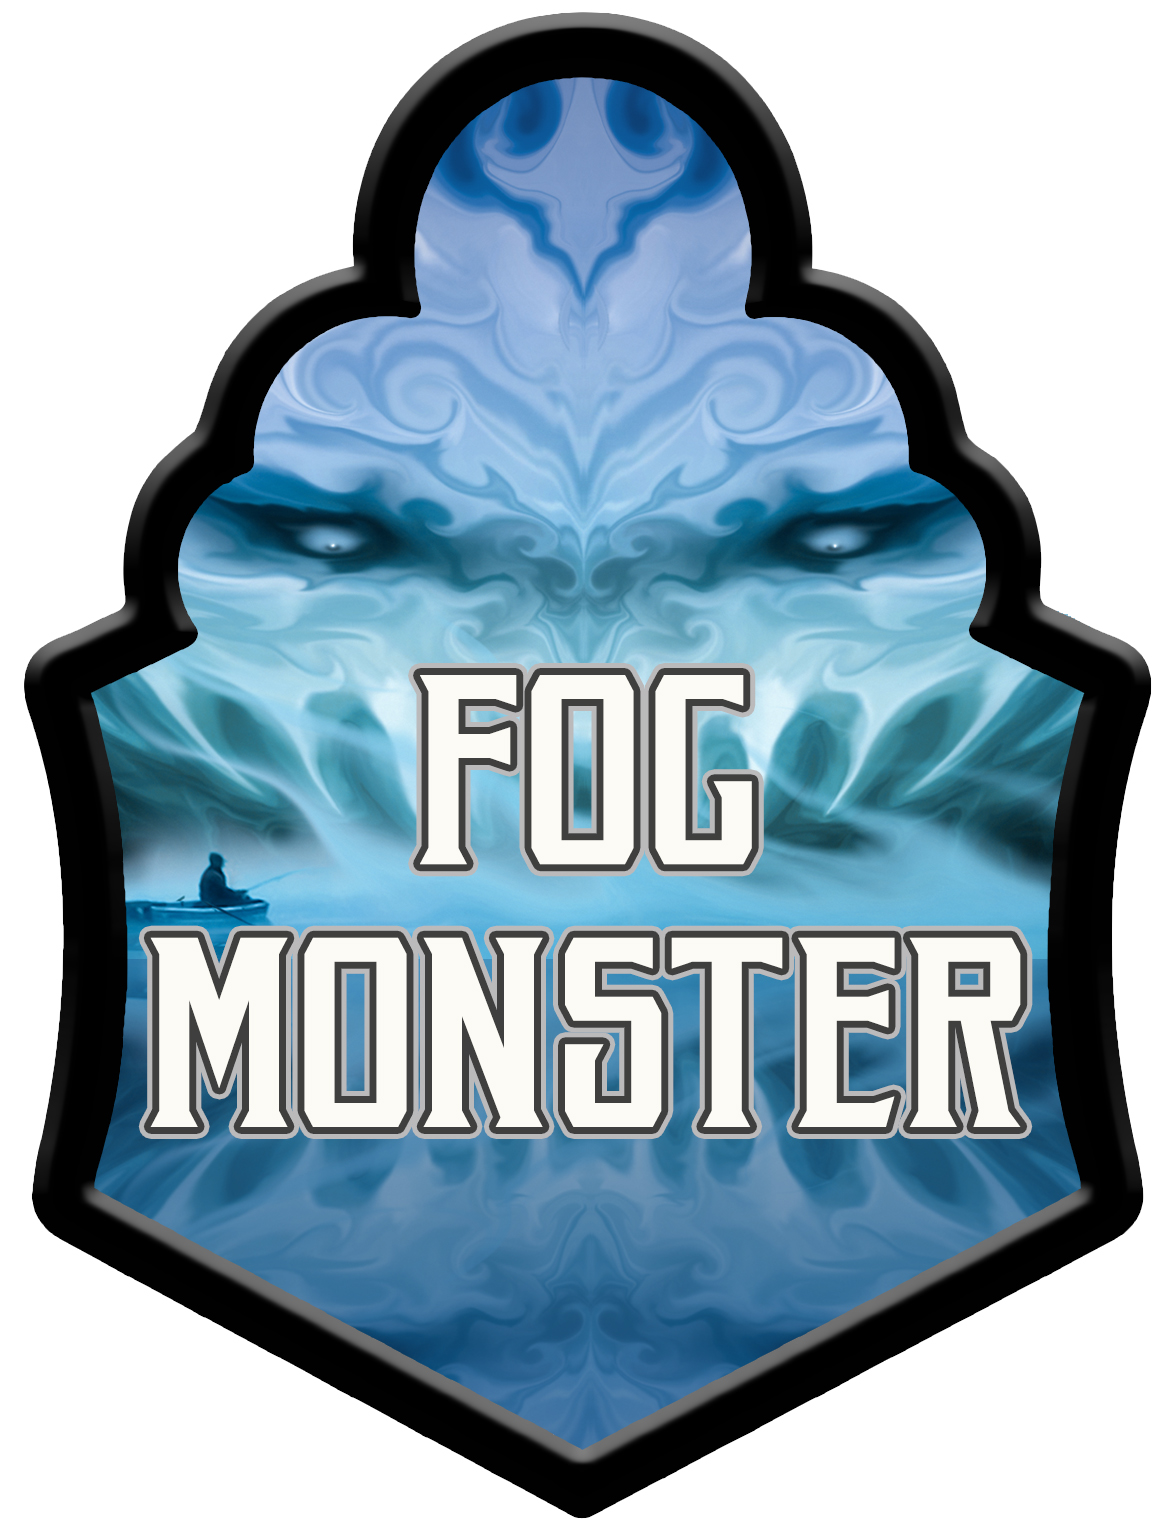  Fog Monster - New England Style IPA - ABV 6.8